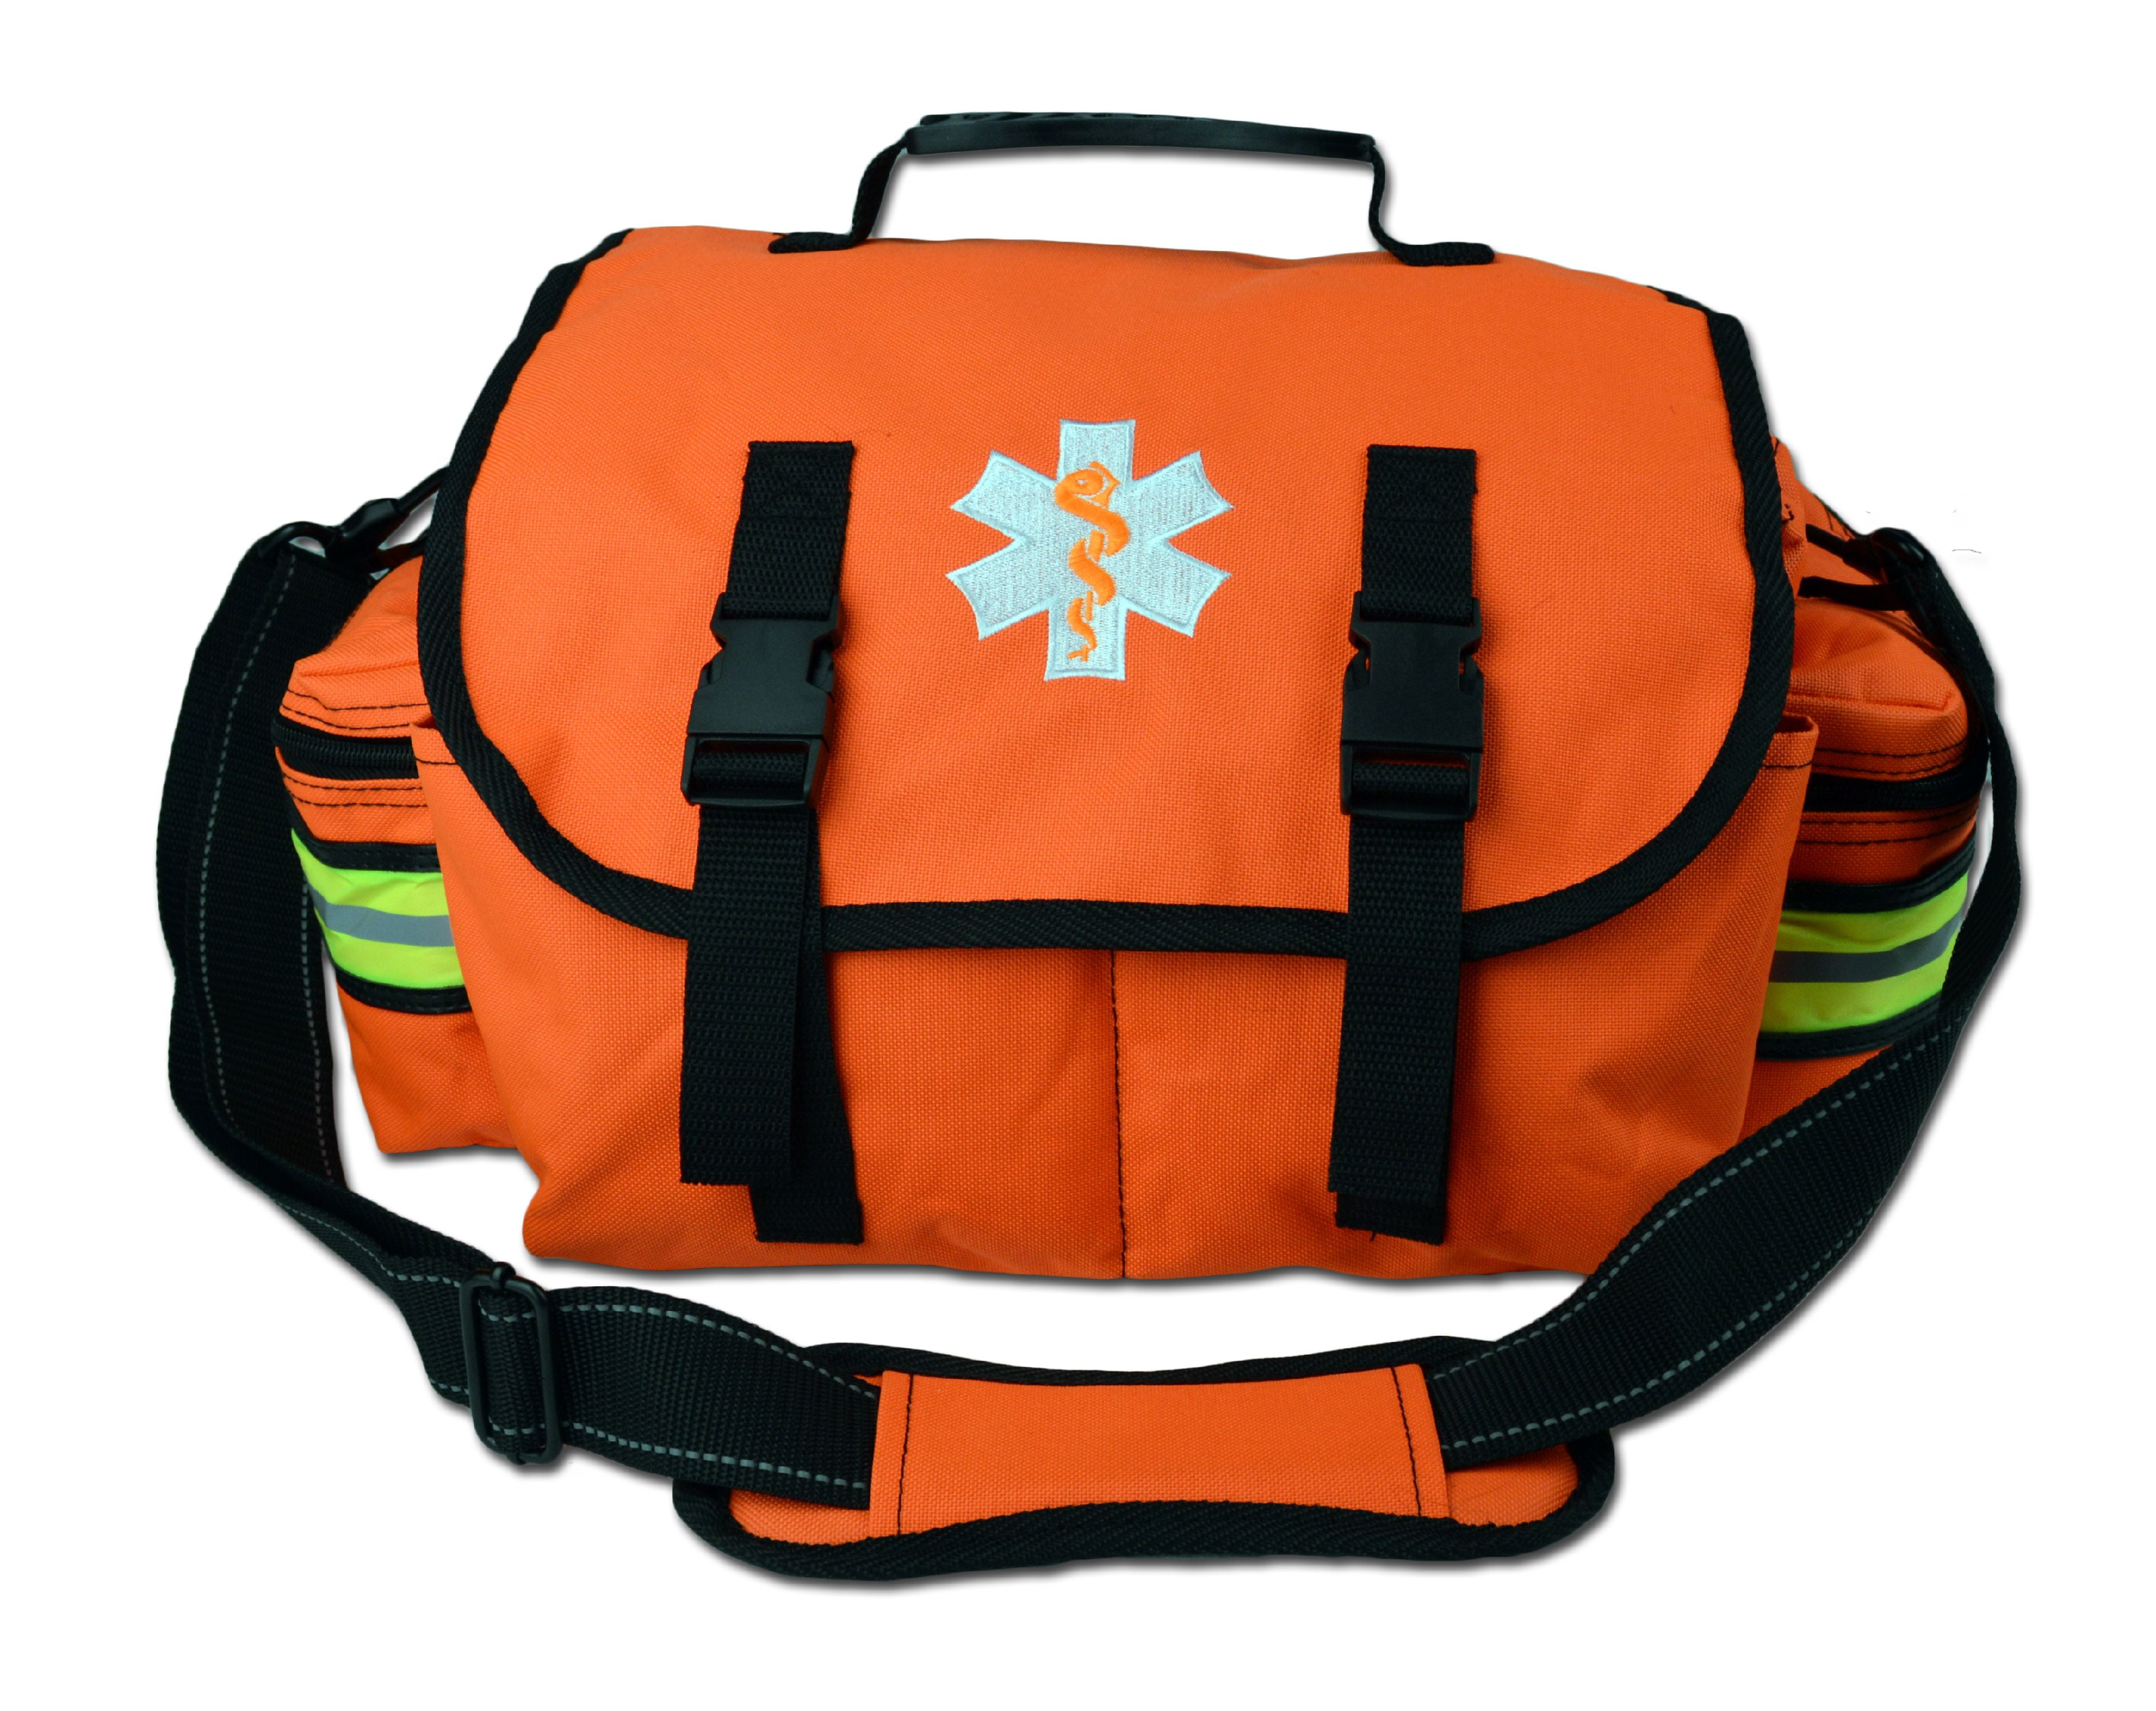 EMT EMS MEDICAL PRO 02 READY GO BAG MEDIC TRAUMA BANDAGE PARAMEDIC BAG W SLING 